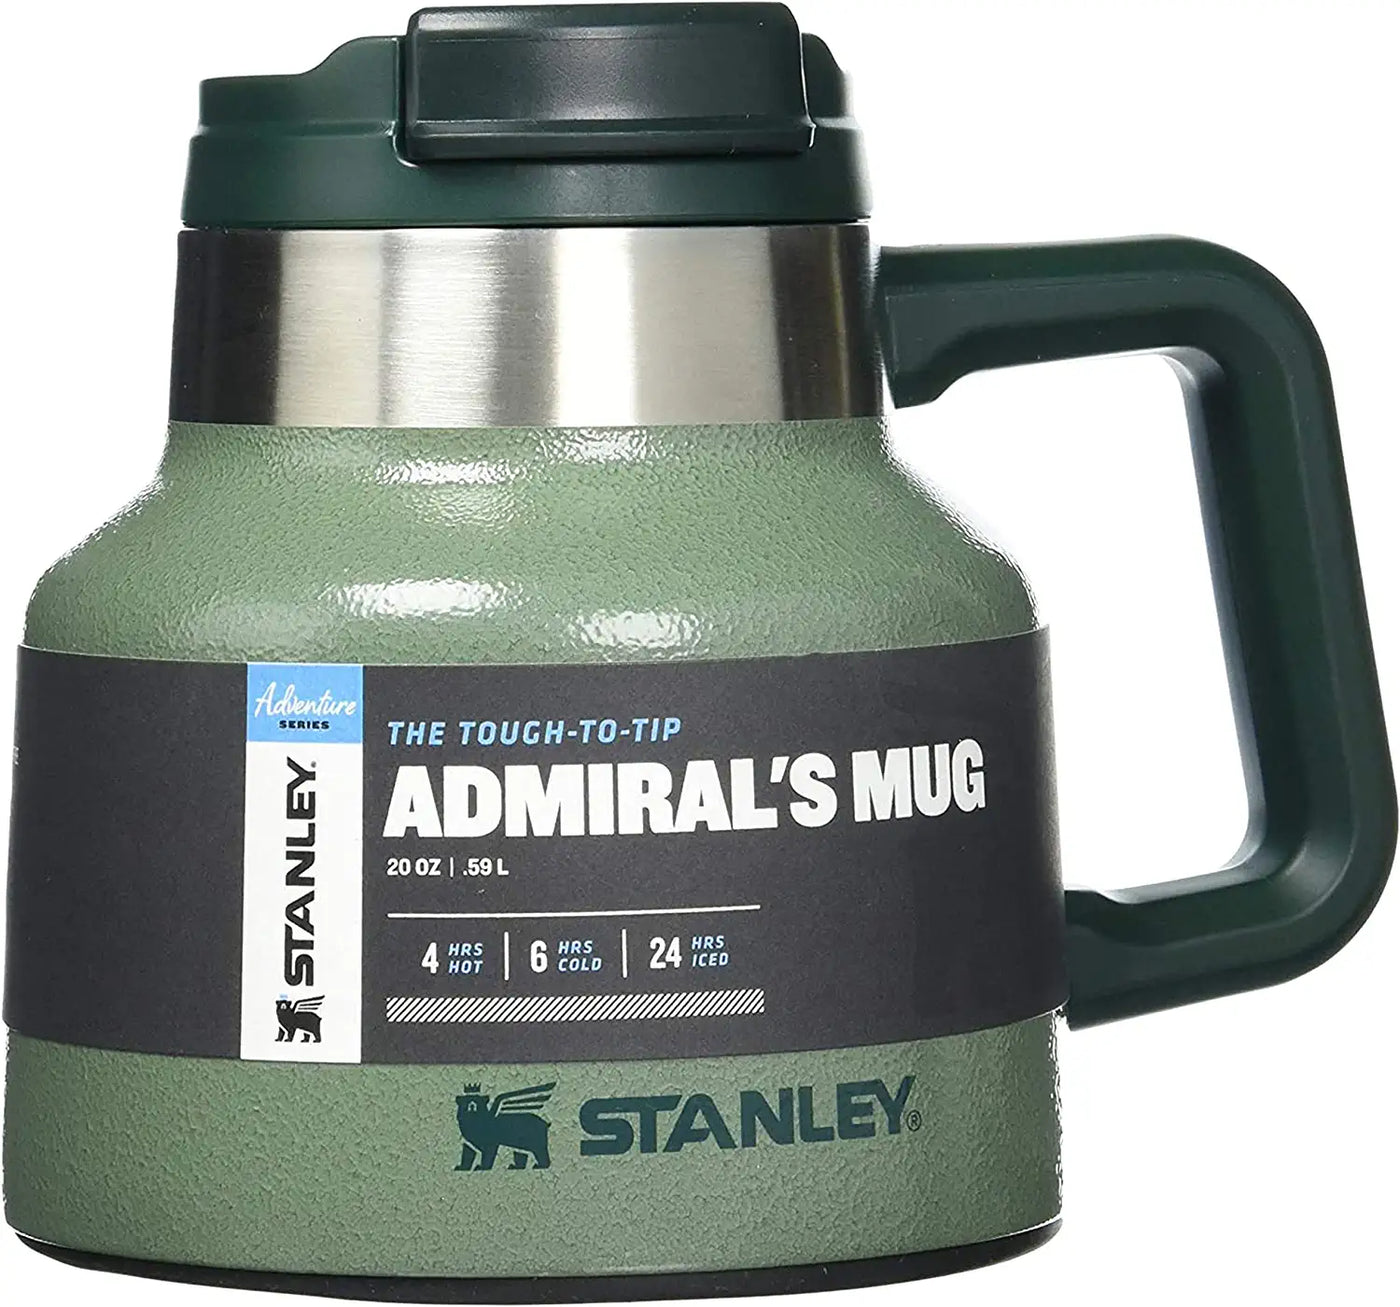 Stanley Admirals Mug Review 